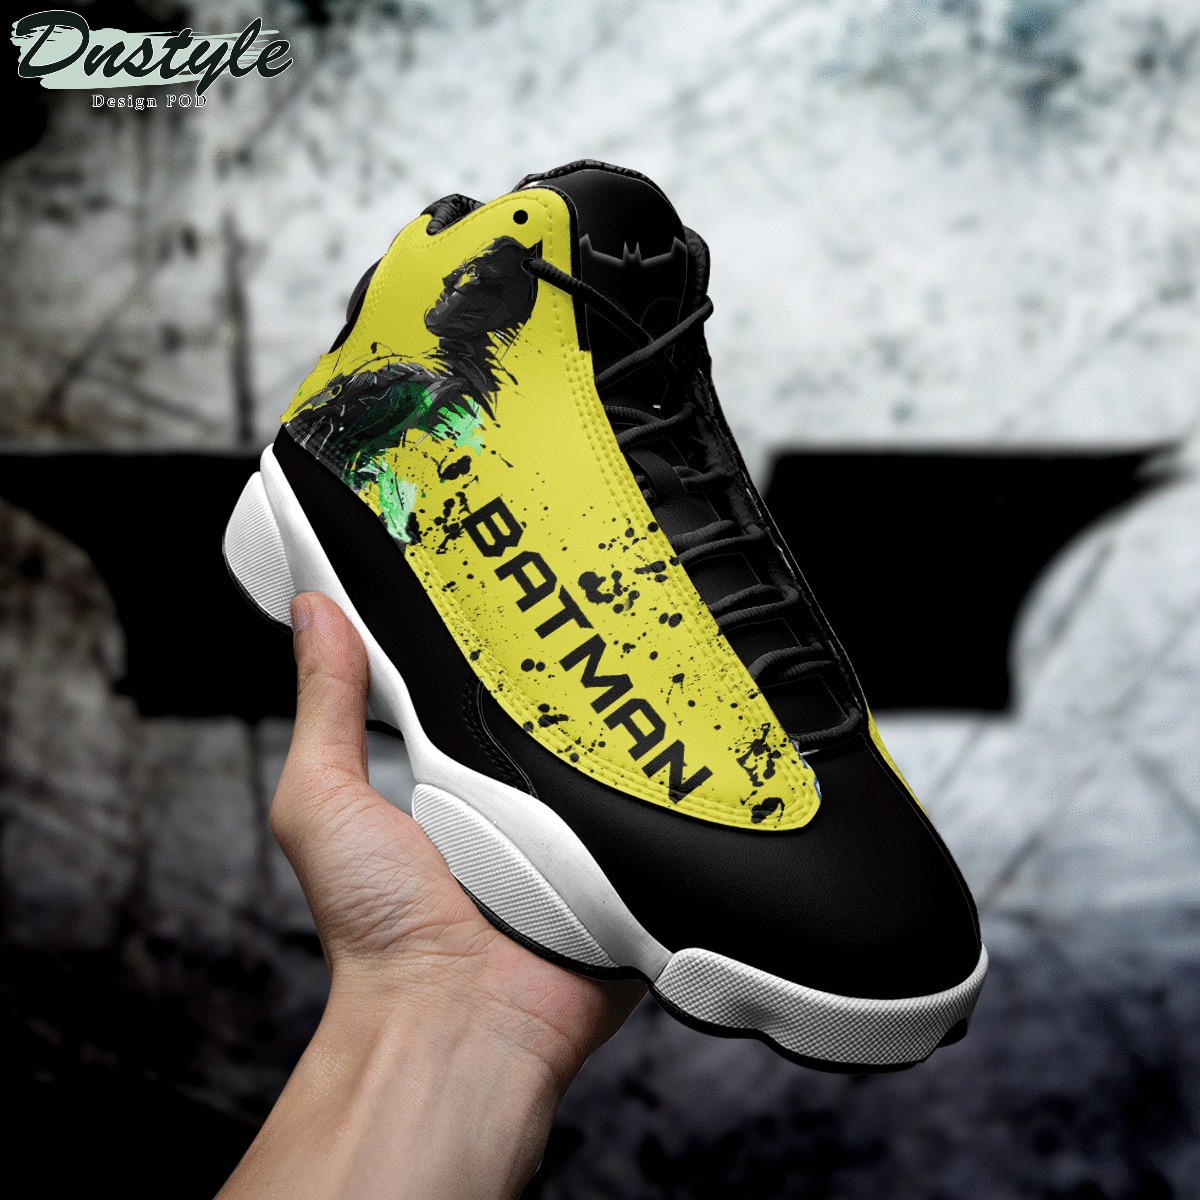 Batman air jordan 13 shoes sneakers